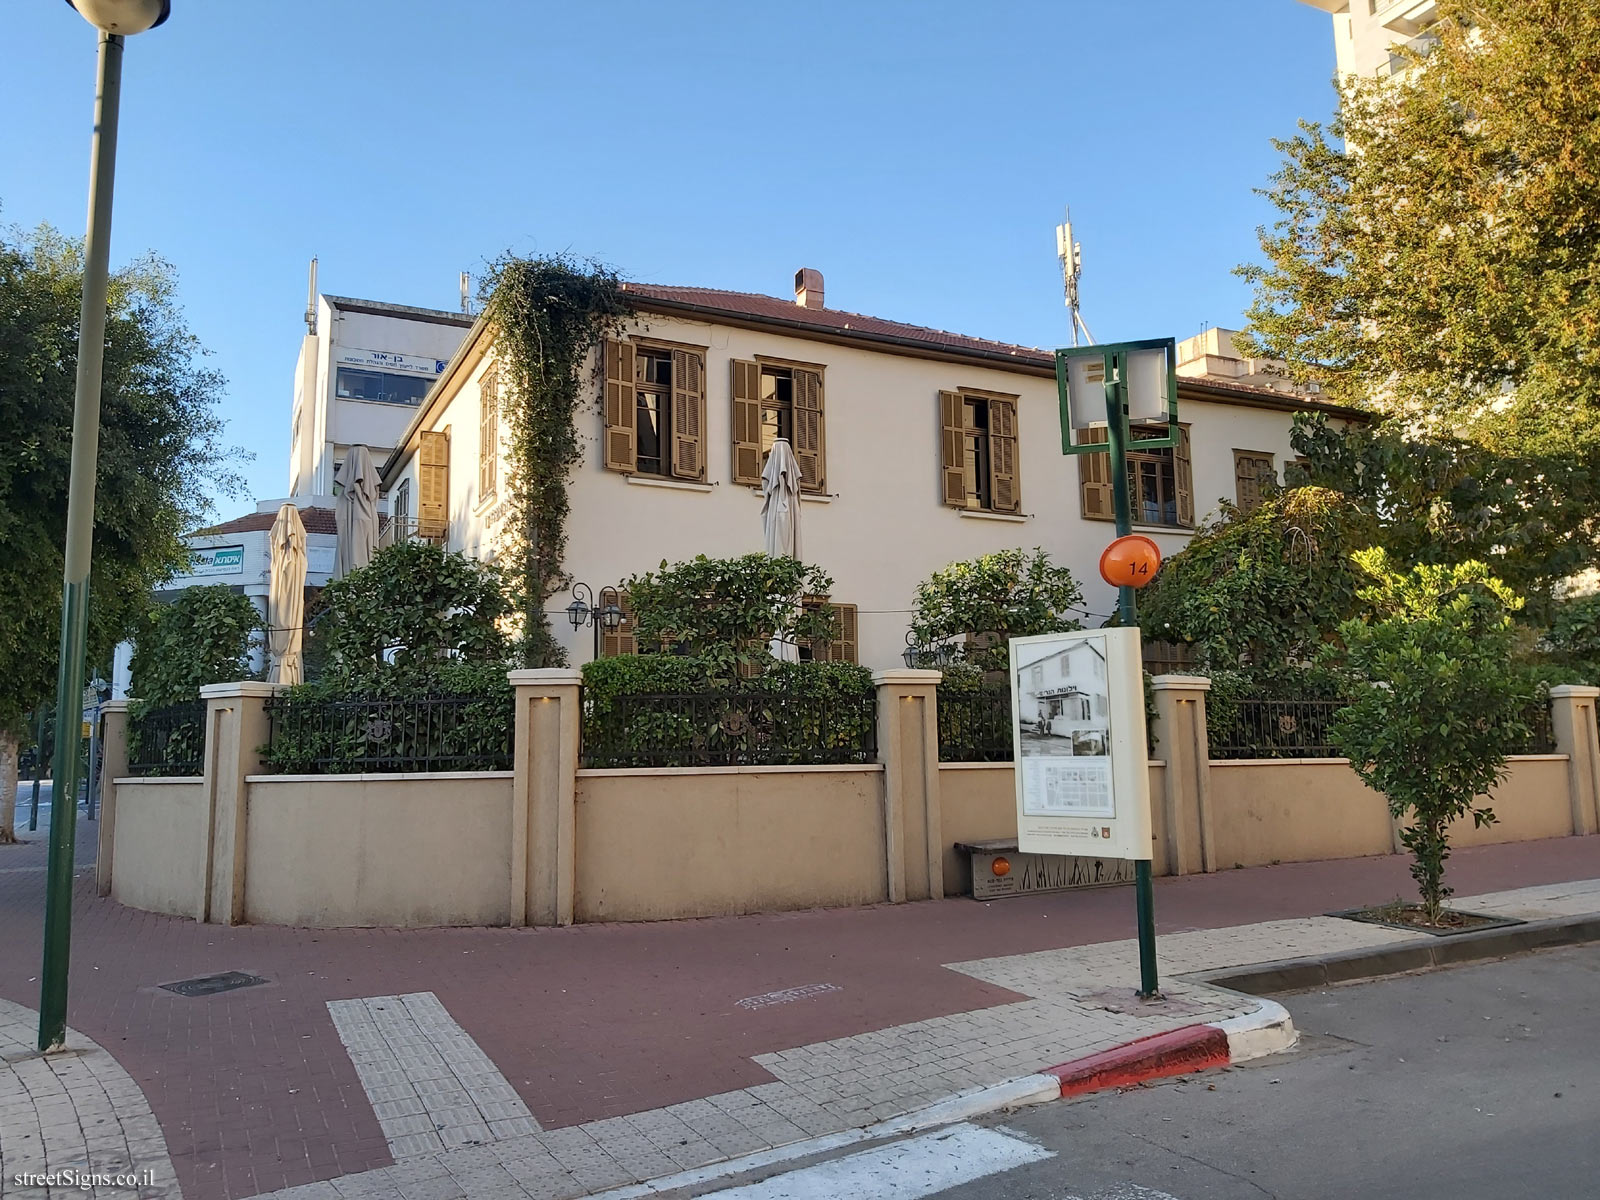 Houminer House - Rothschild St 59, Kefar Sava, Israel